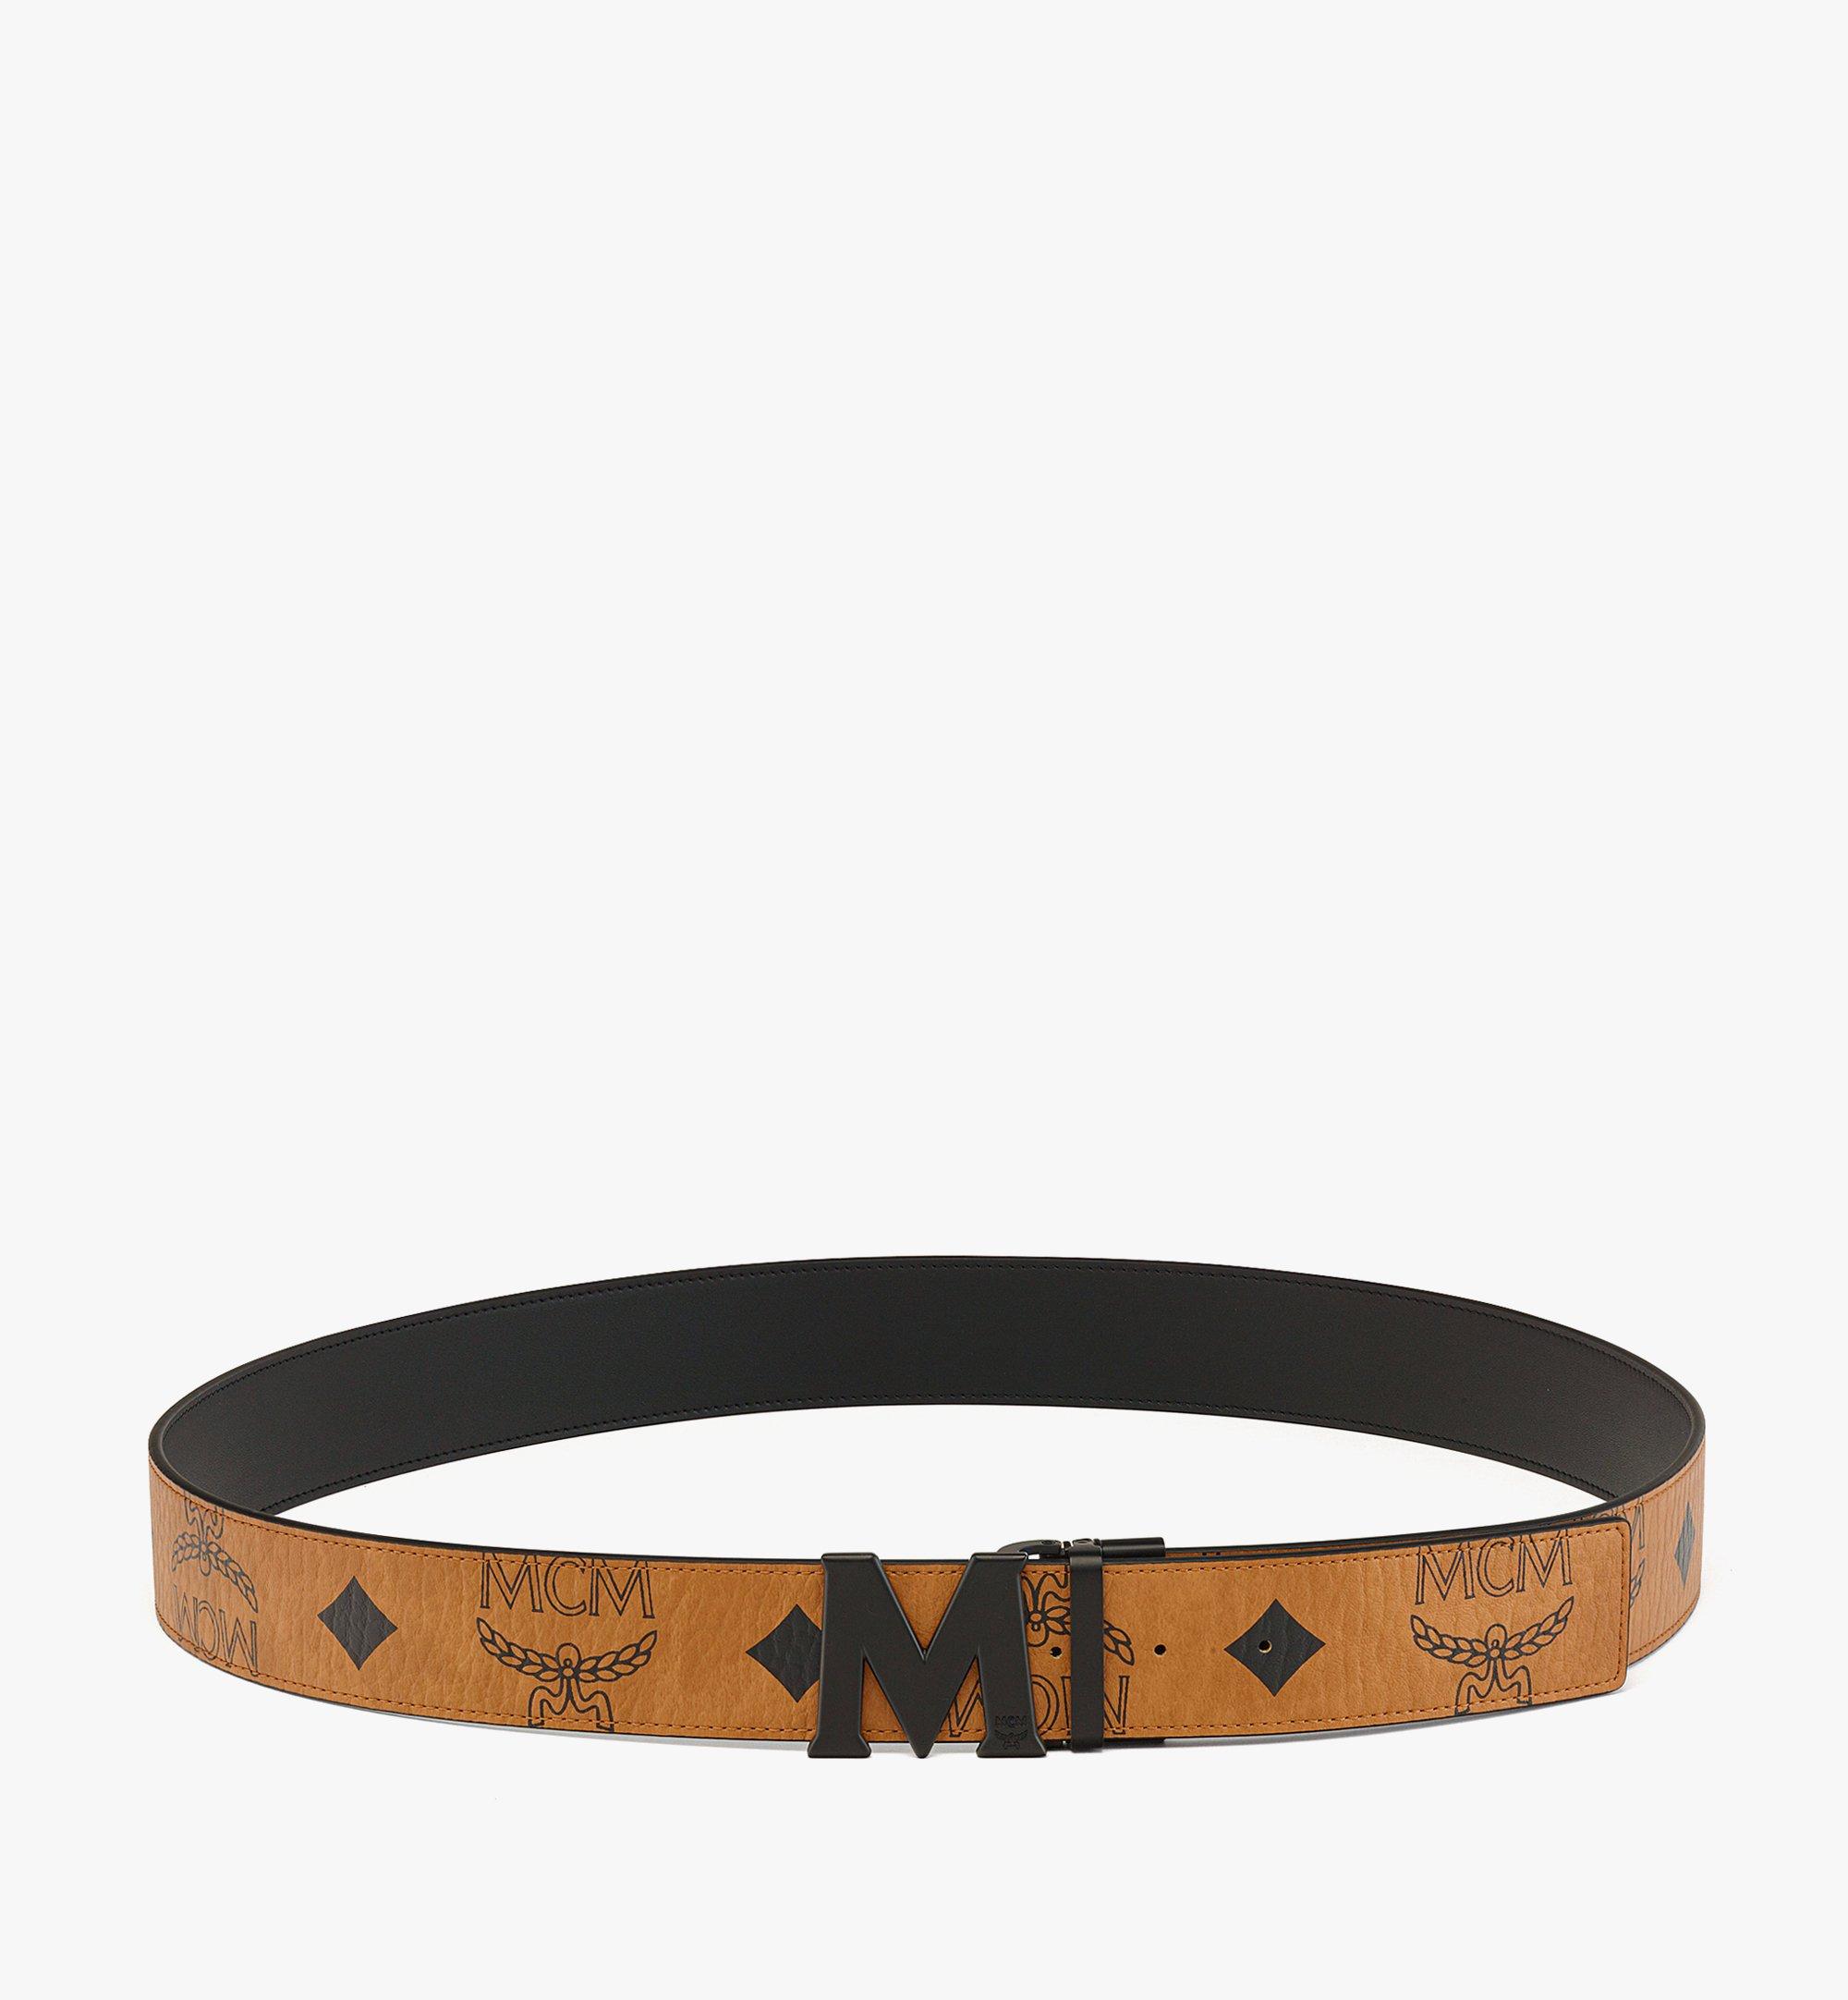 MCM Claus Matte M Reversible Belt 1.75” in Maxi Visetos Cognac MXBDATA01CO001 Alternate View 1